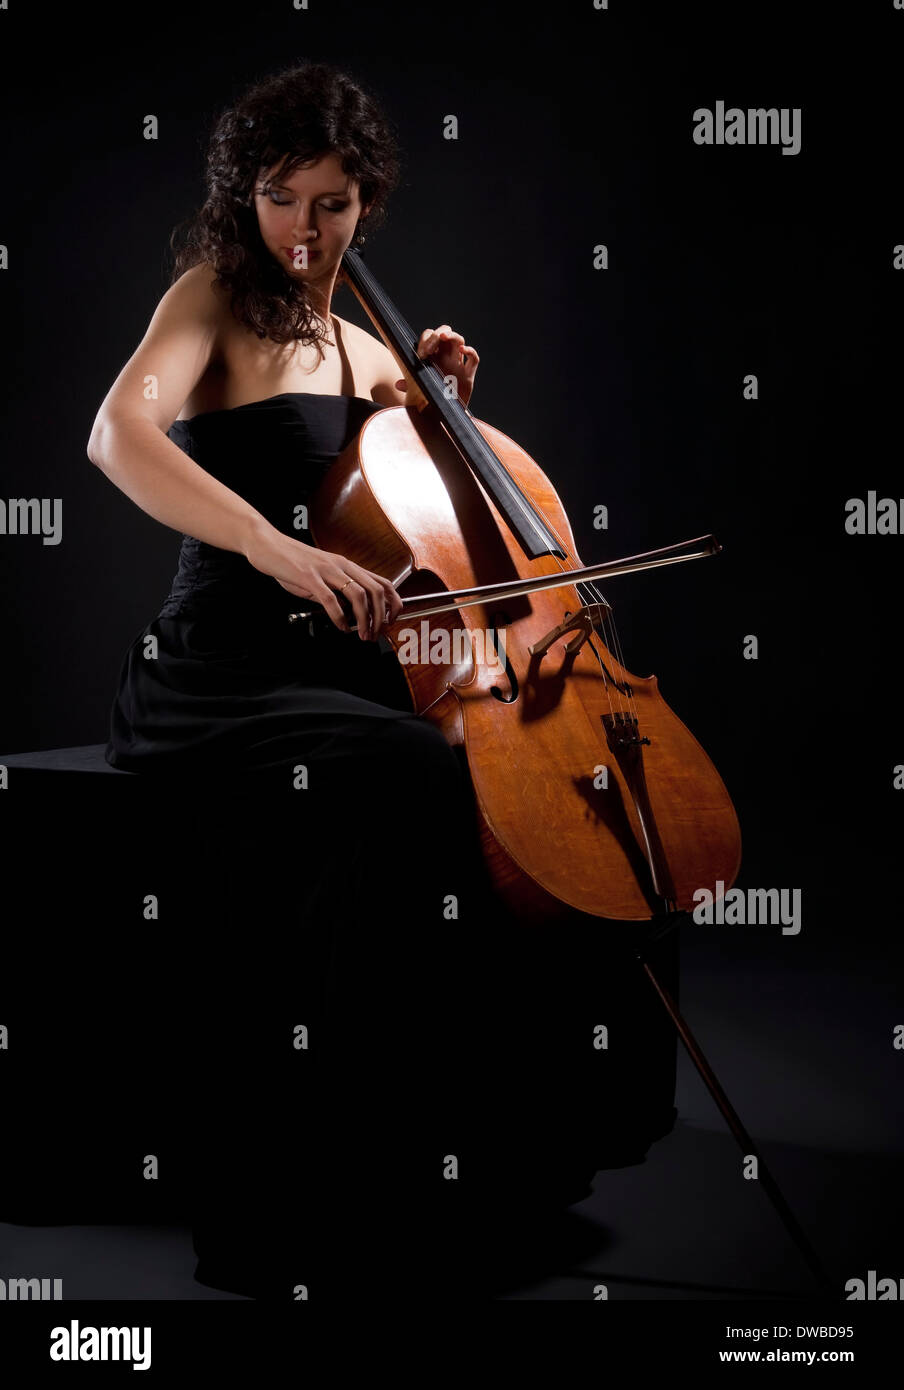 Junge Frau spielt Violoncello Stockfoto